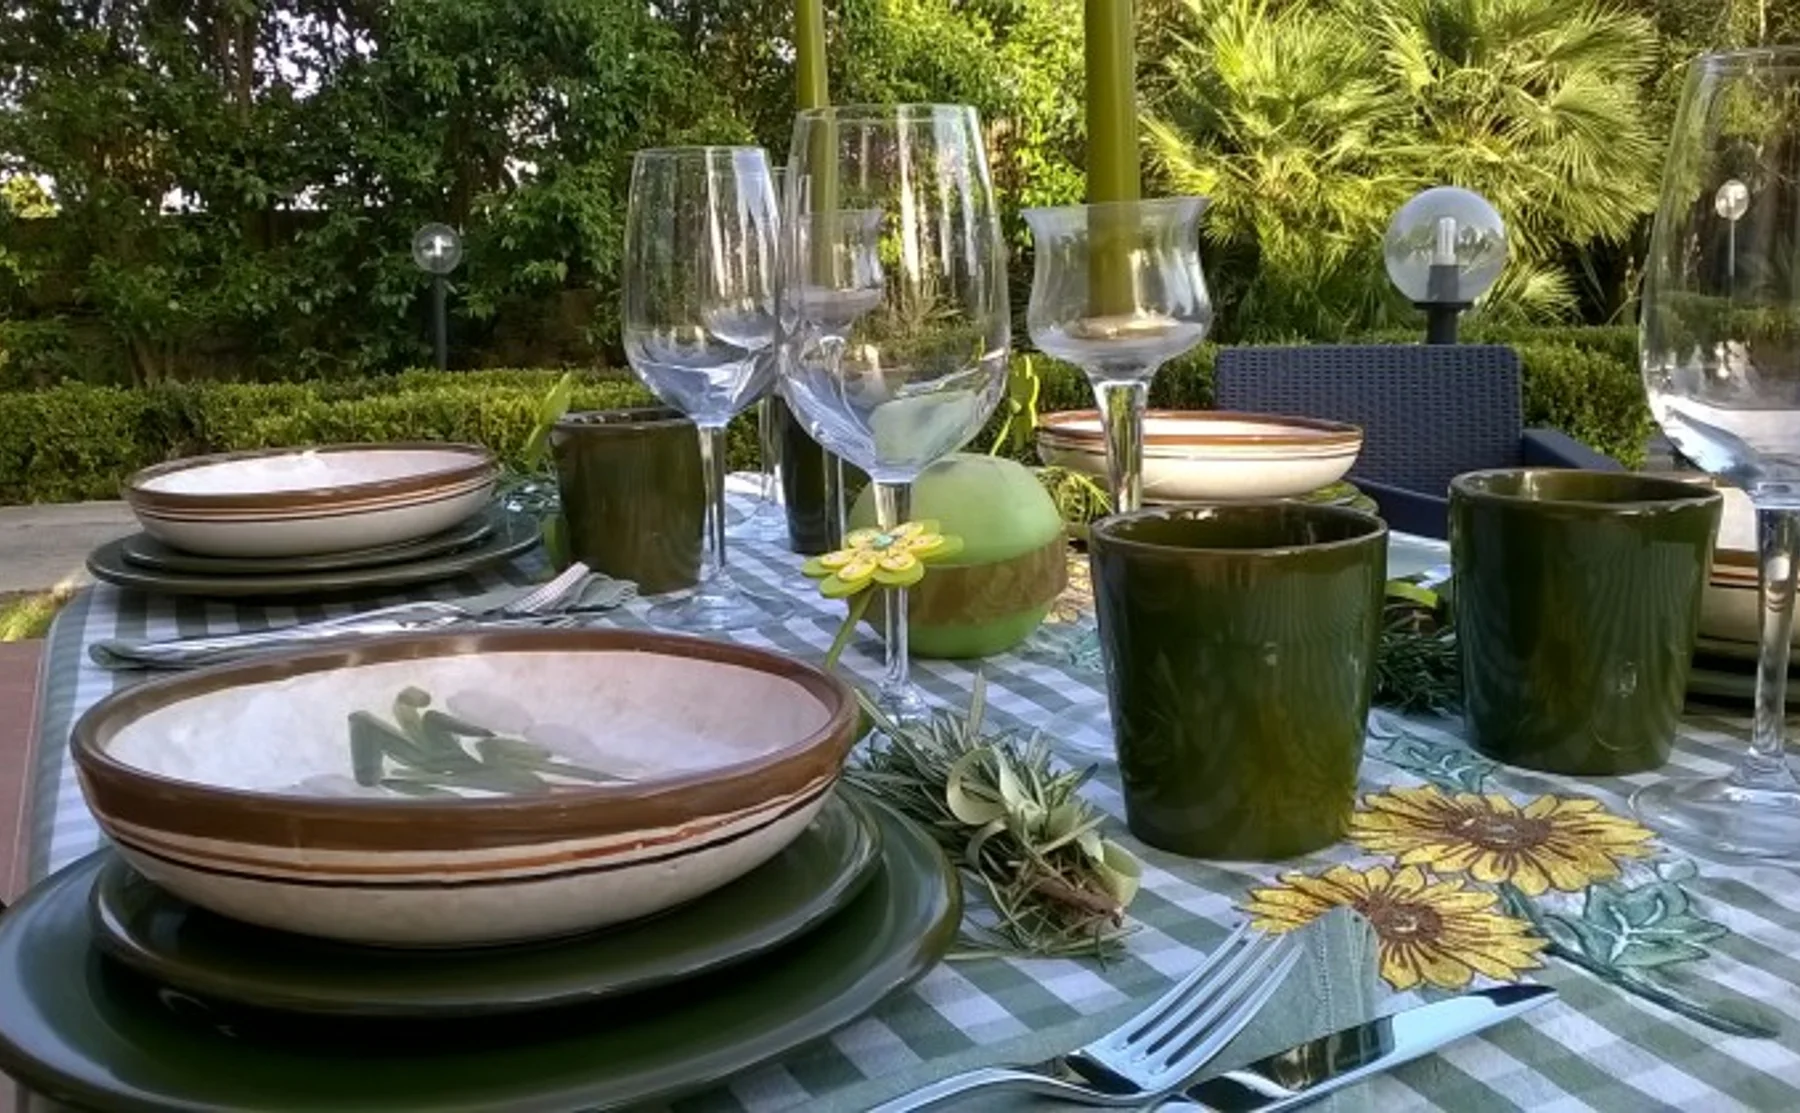 Typical Sicilian dinner in a Siracuse garden  - 1534131